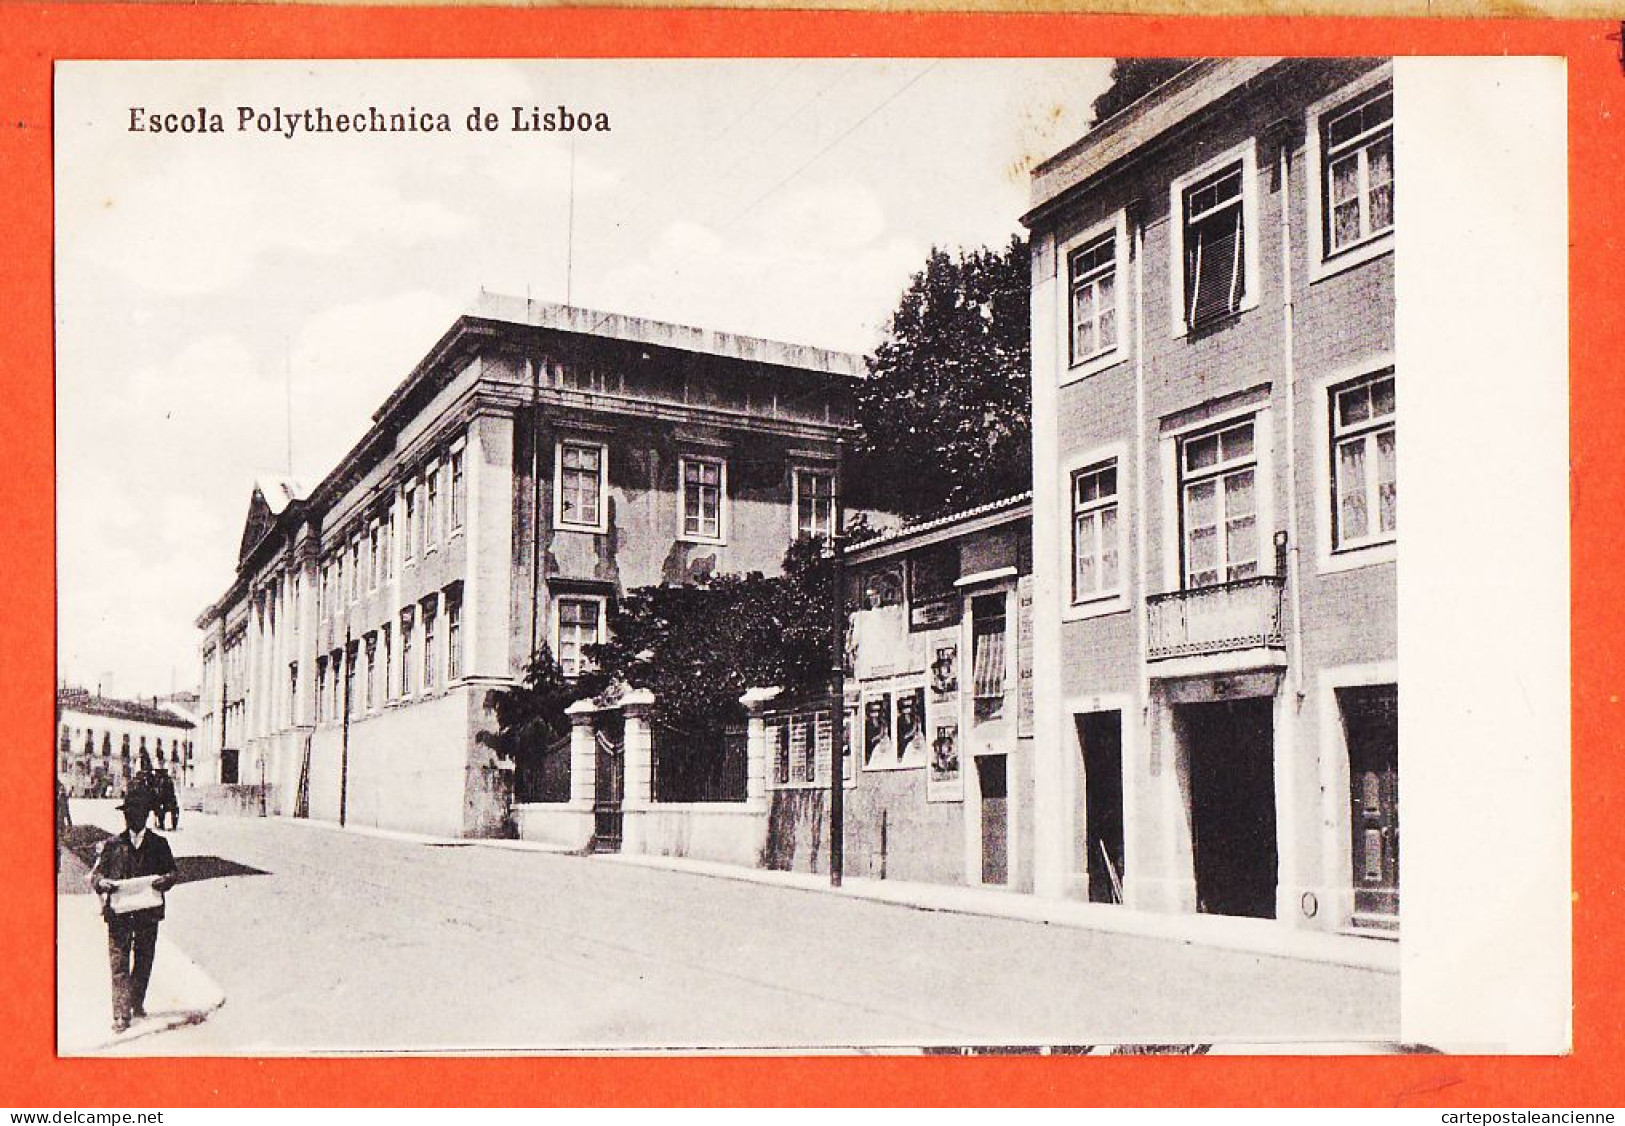 24601 / ⭐ Etat Parfait ◉ LISBOA Portugal ◉ Escola Polythechnica ◉ LISBONNE Ecole Polytechnique 1910s ◉ 1193 Edicao COSTA - Lisboa